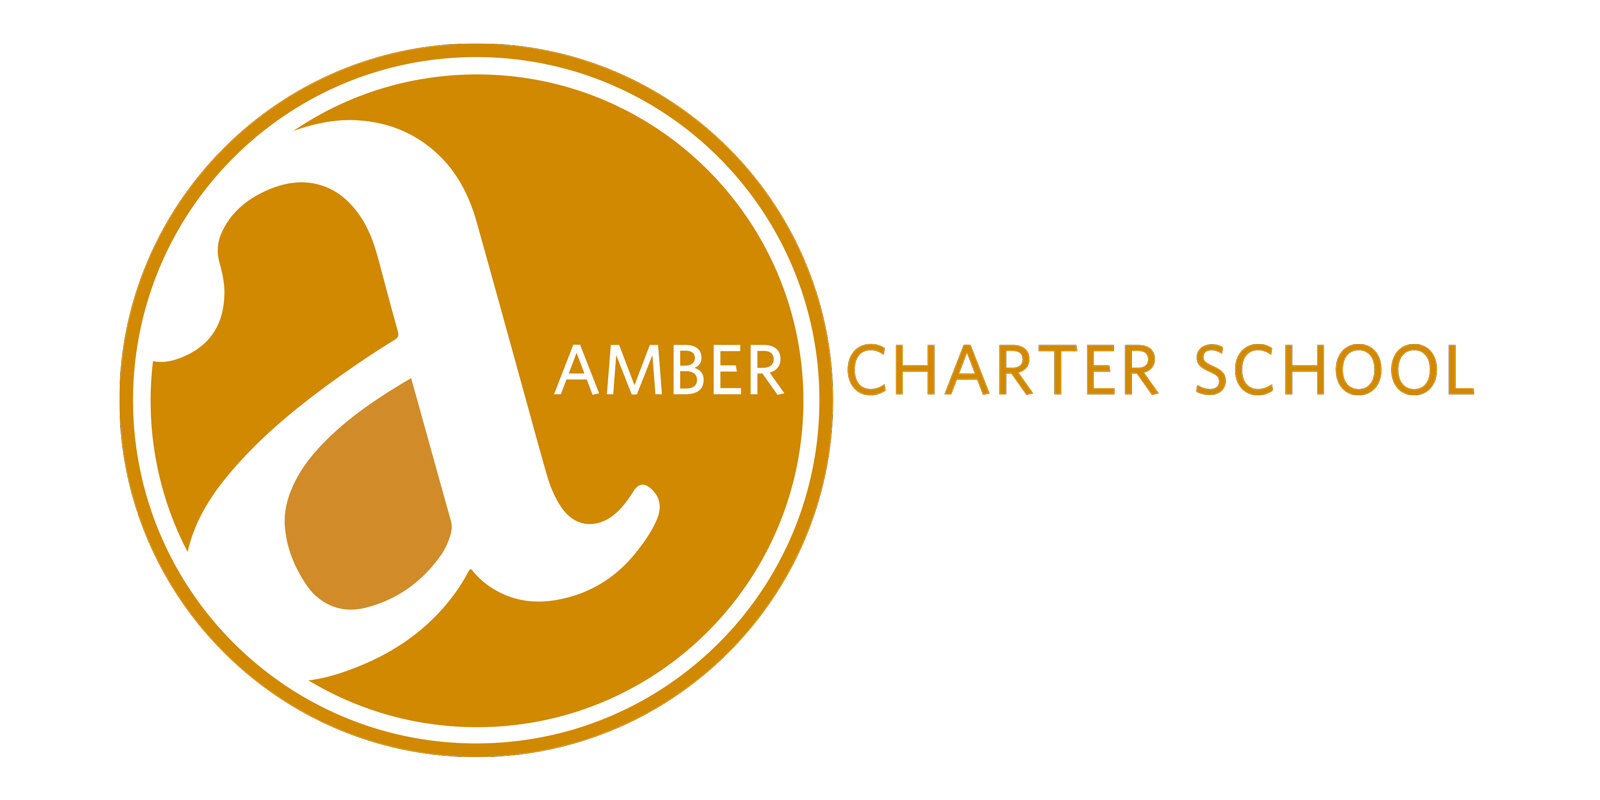 Amber Charter School Logo 2.jpg